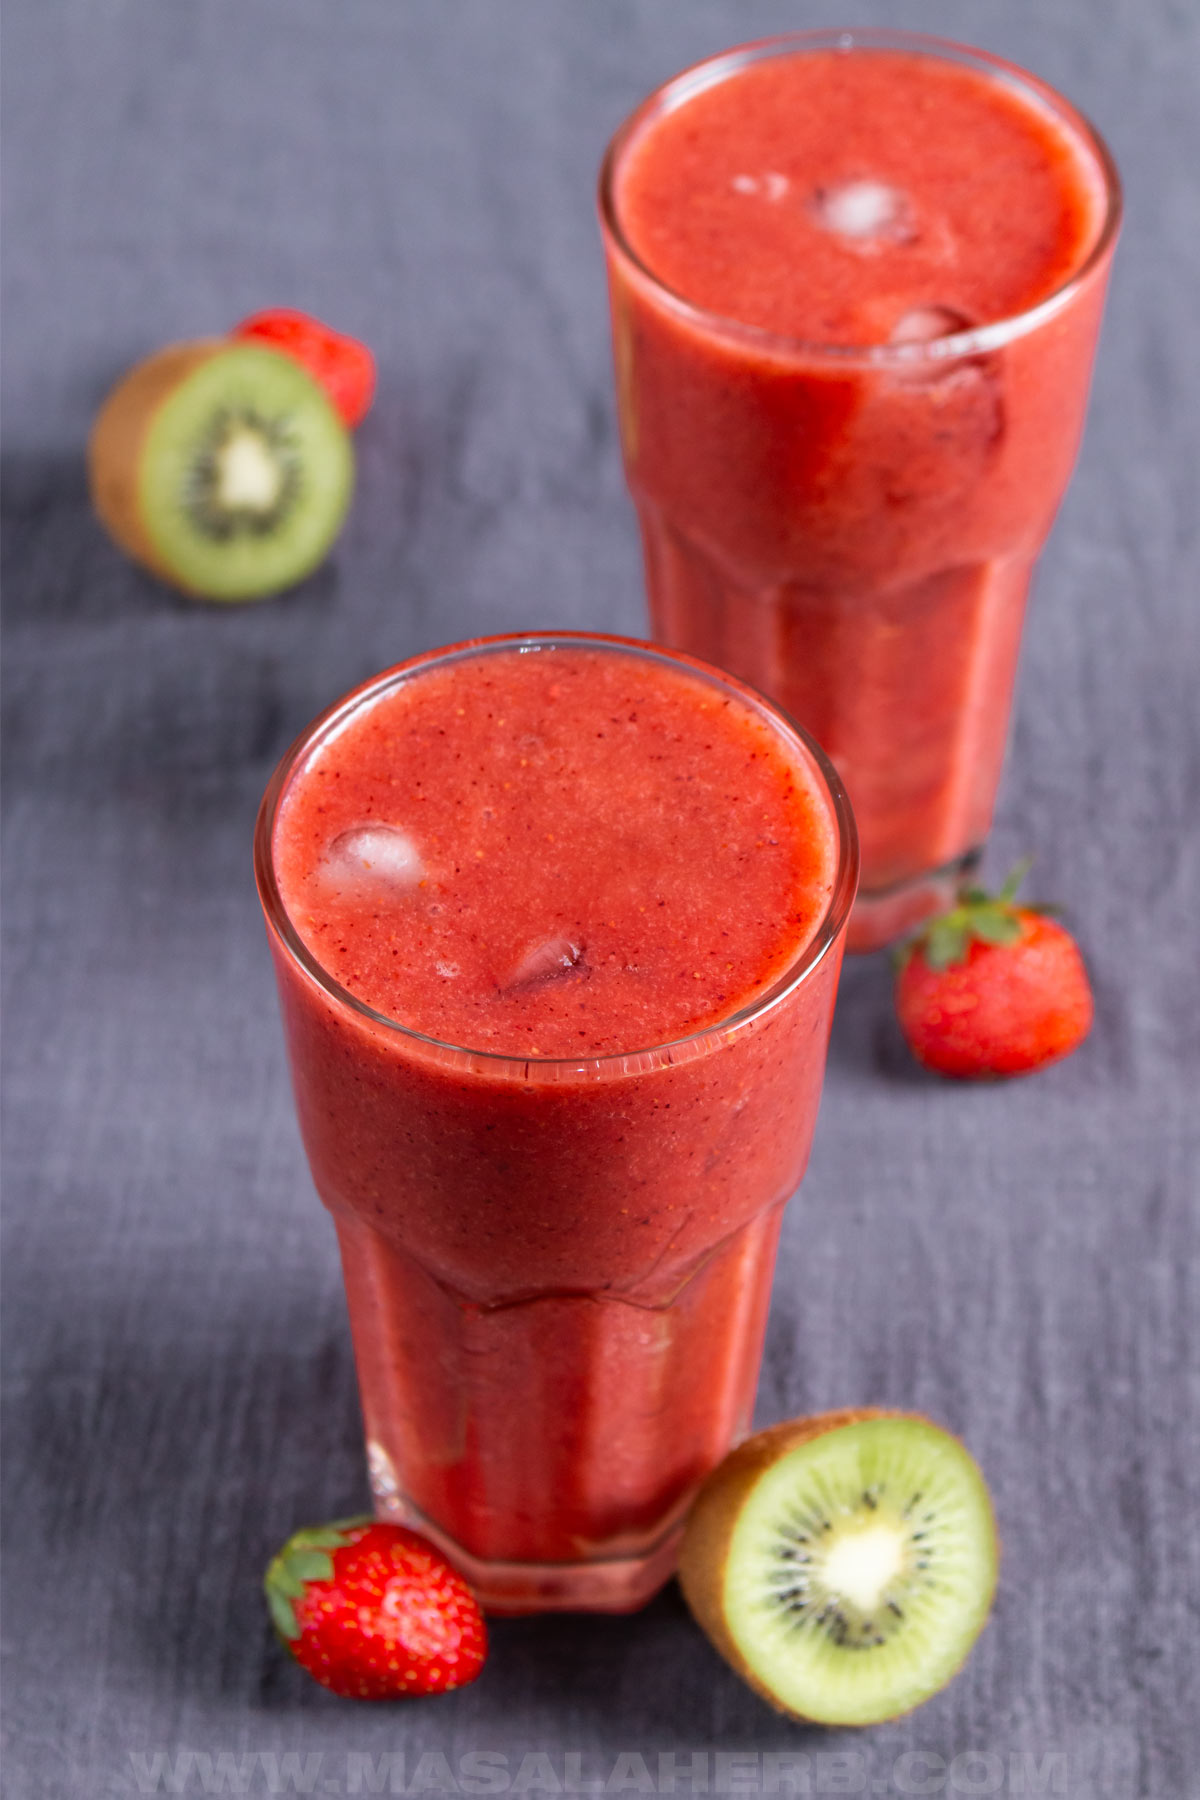 strawberry kiwi juice in 2 glasses